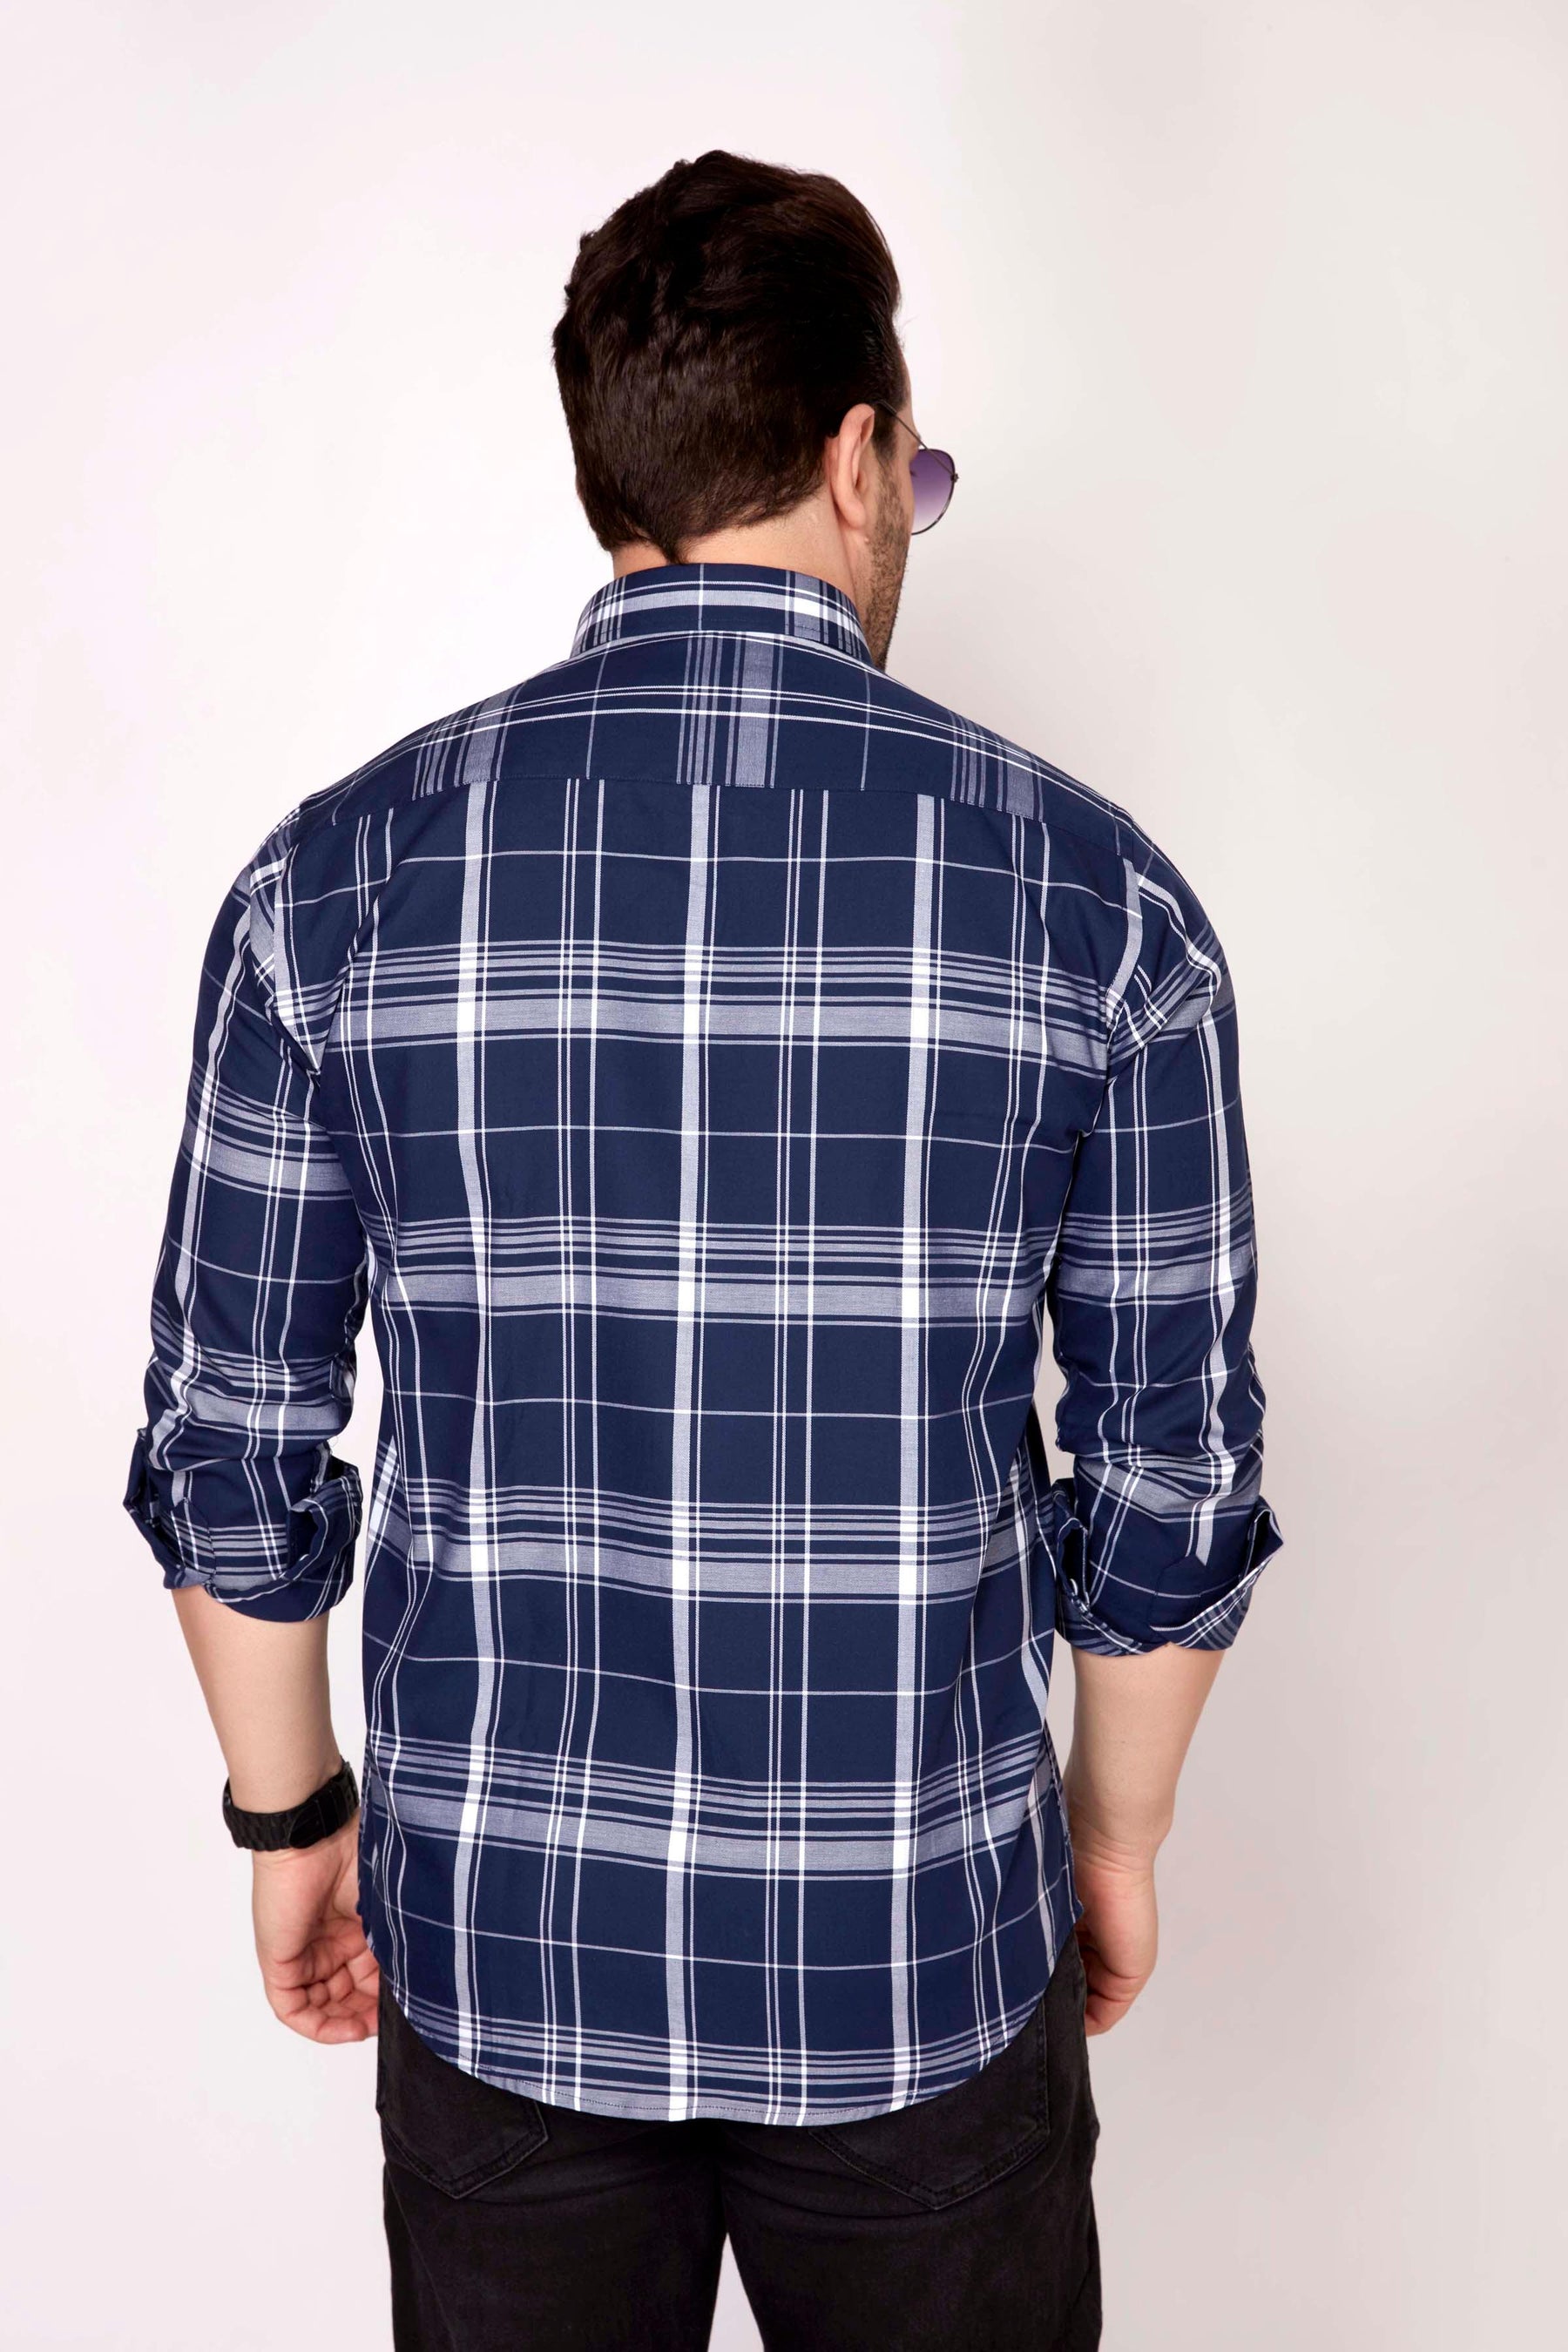 Asaph - Checkered slim fit shirt - John Watson